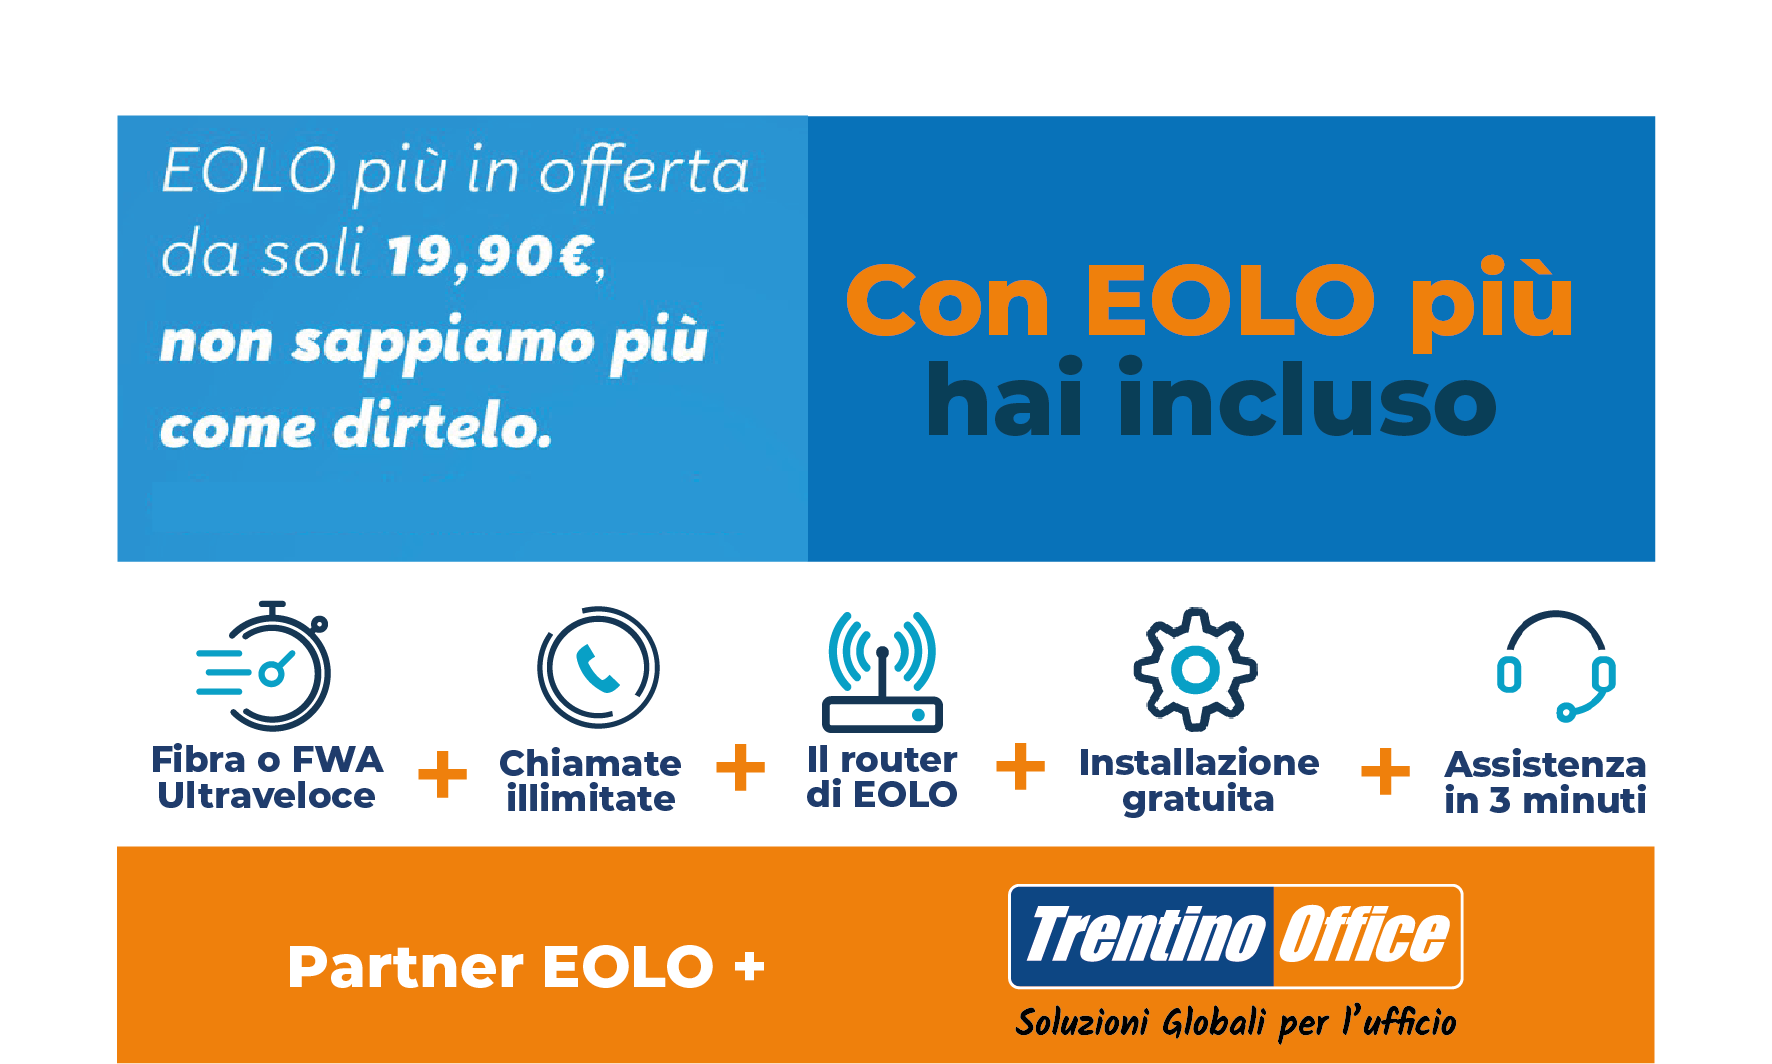 Trentino Office Partner Eolo+